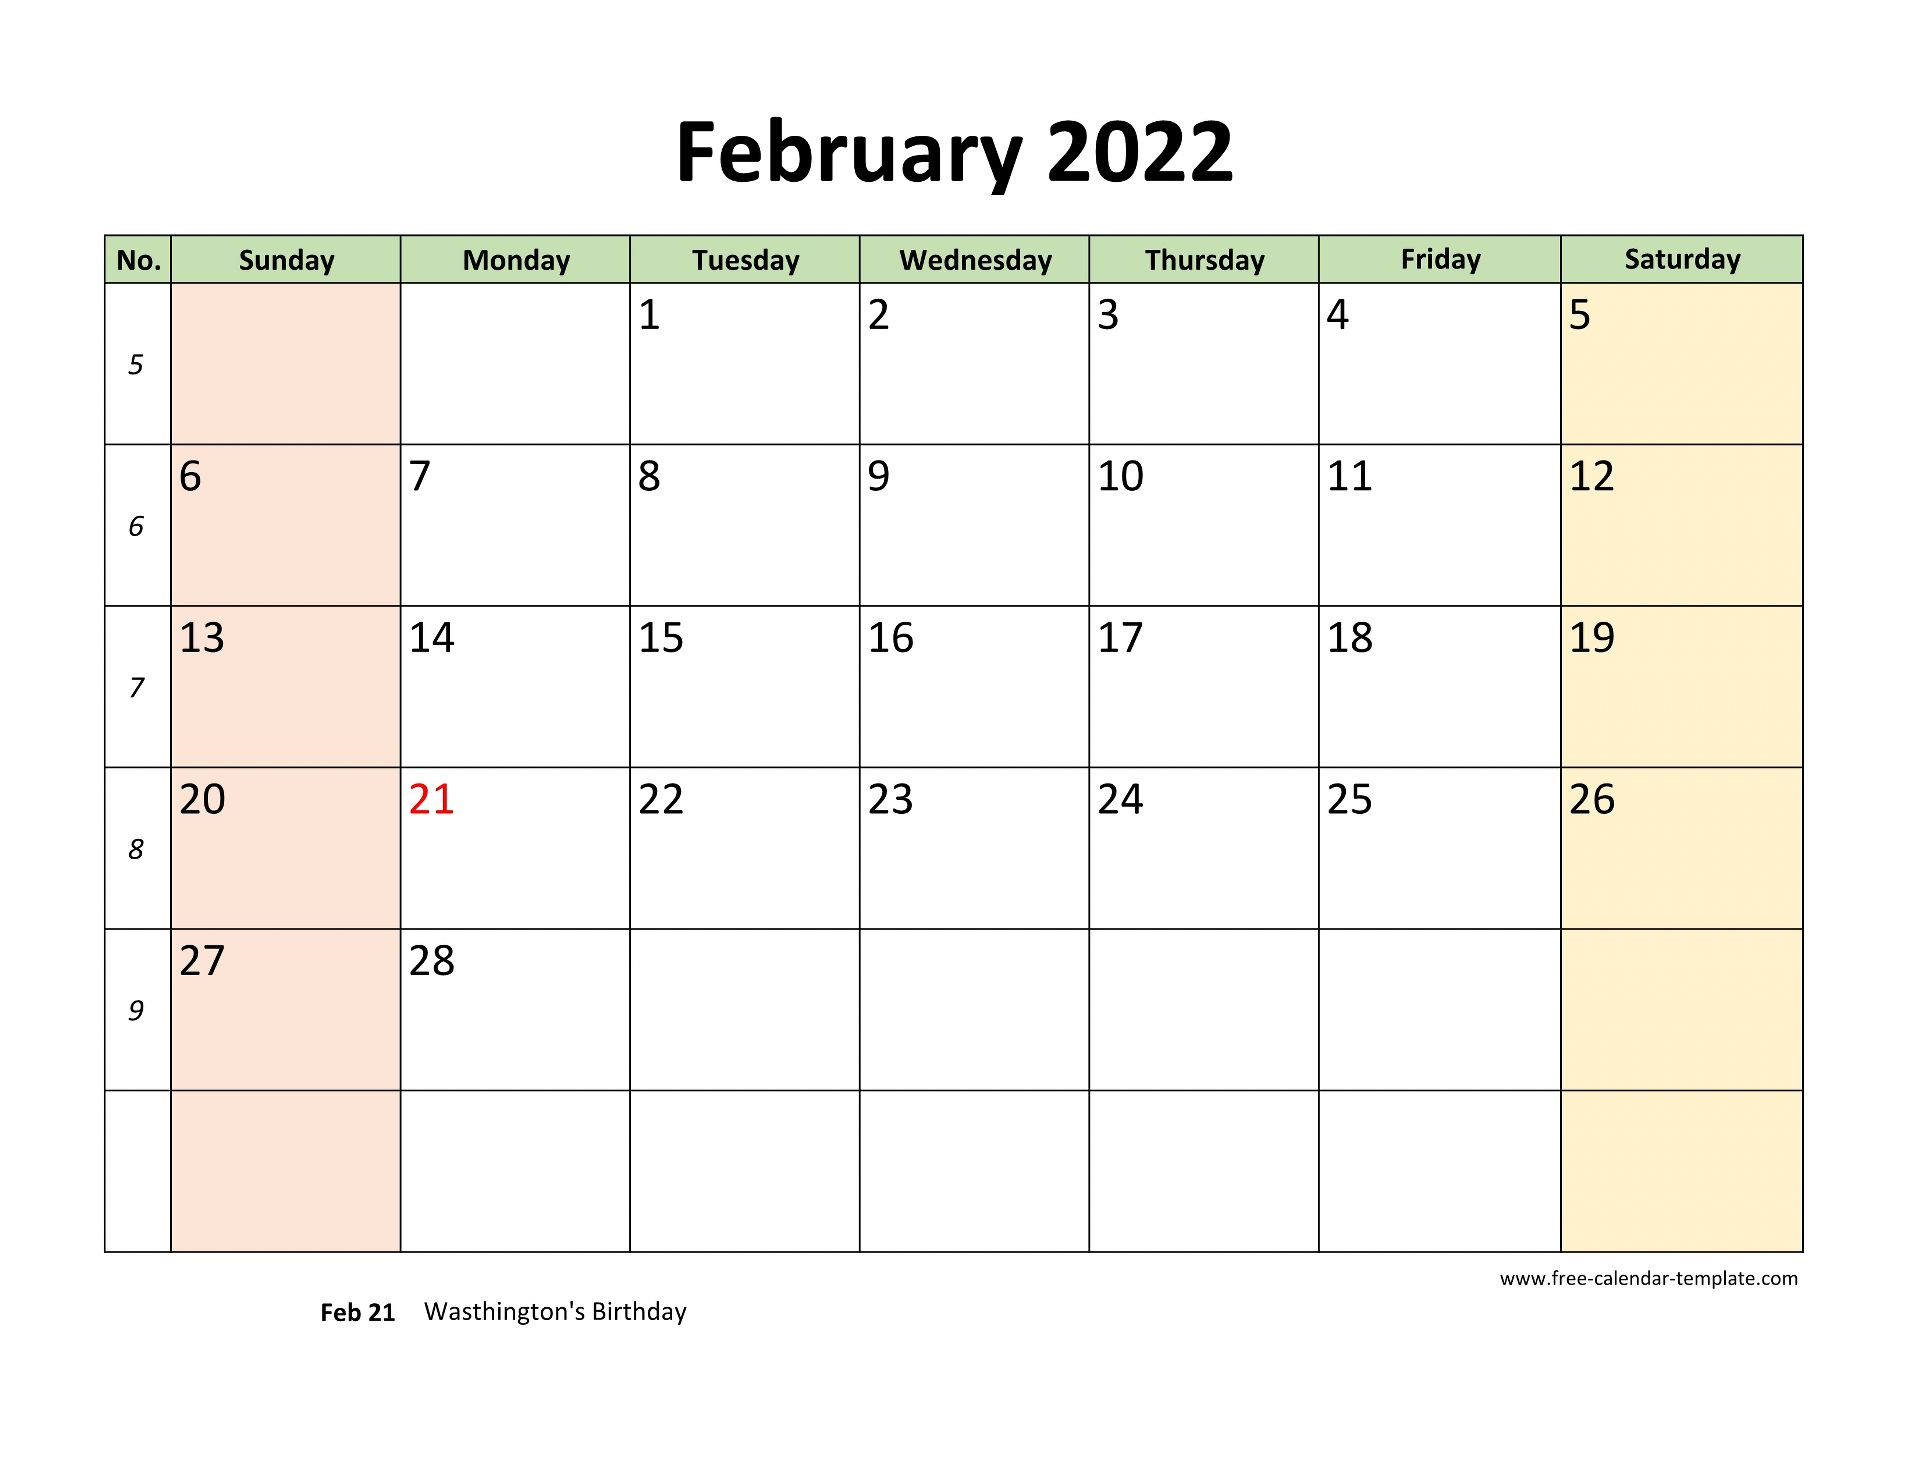 February 2022 Free Calendar Tempplate Free Calendar 1